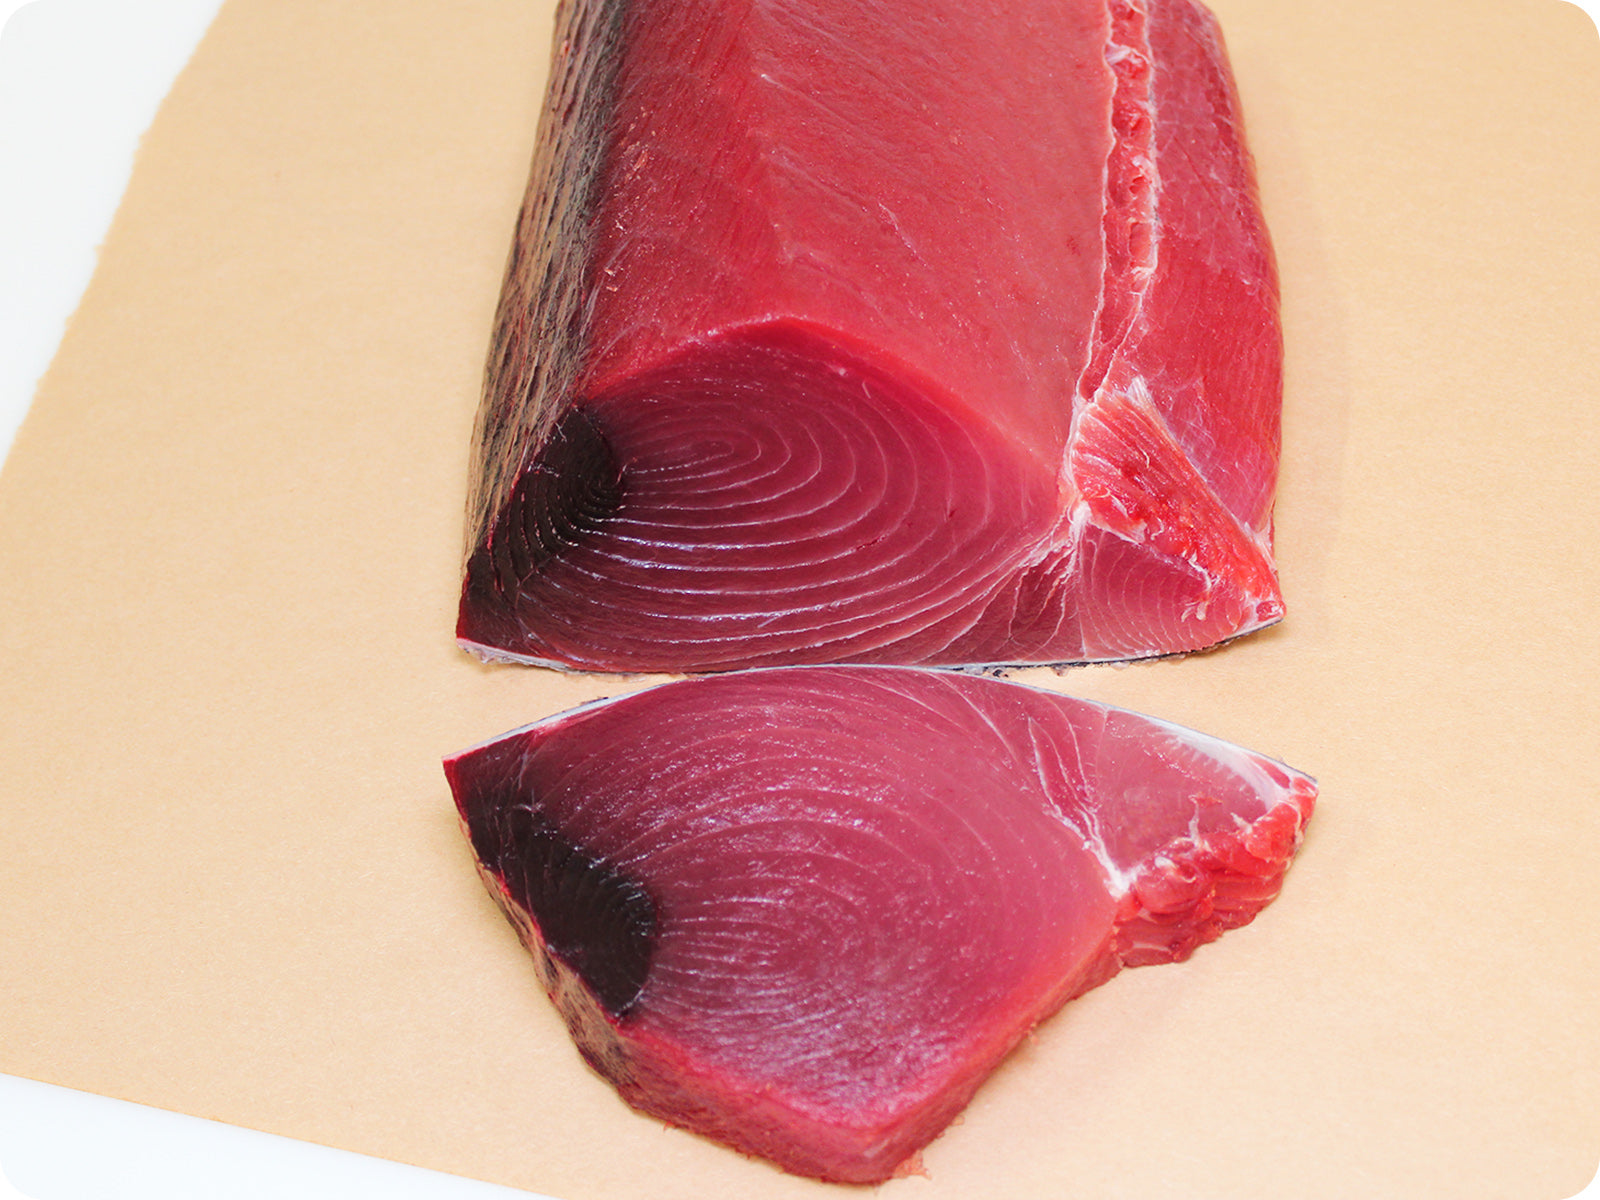 Albacore Tuna Loin - Sashimi Grade